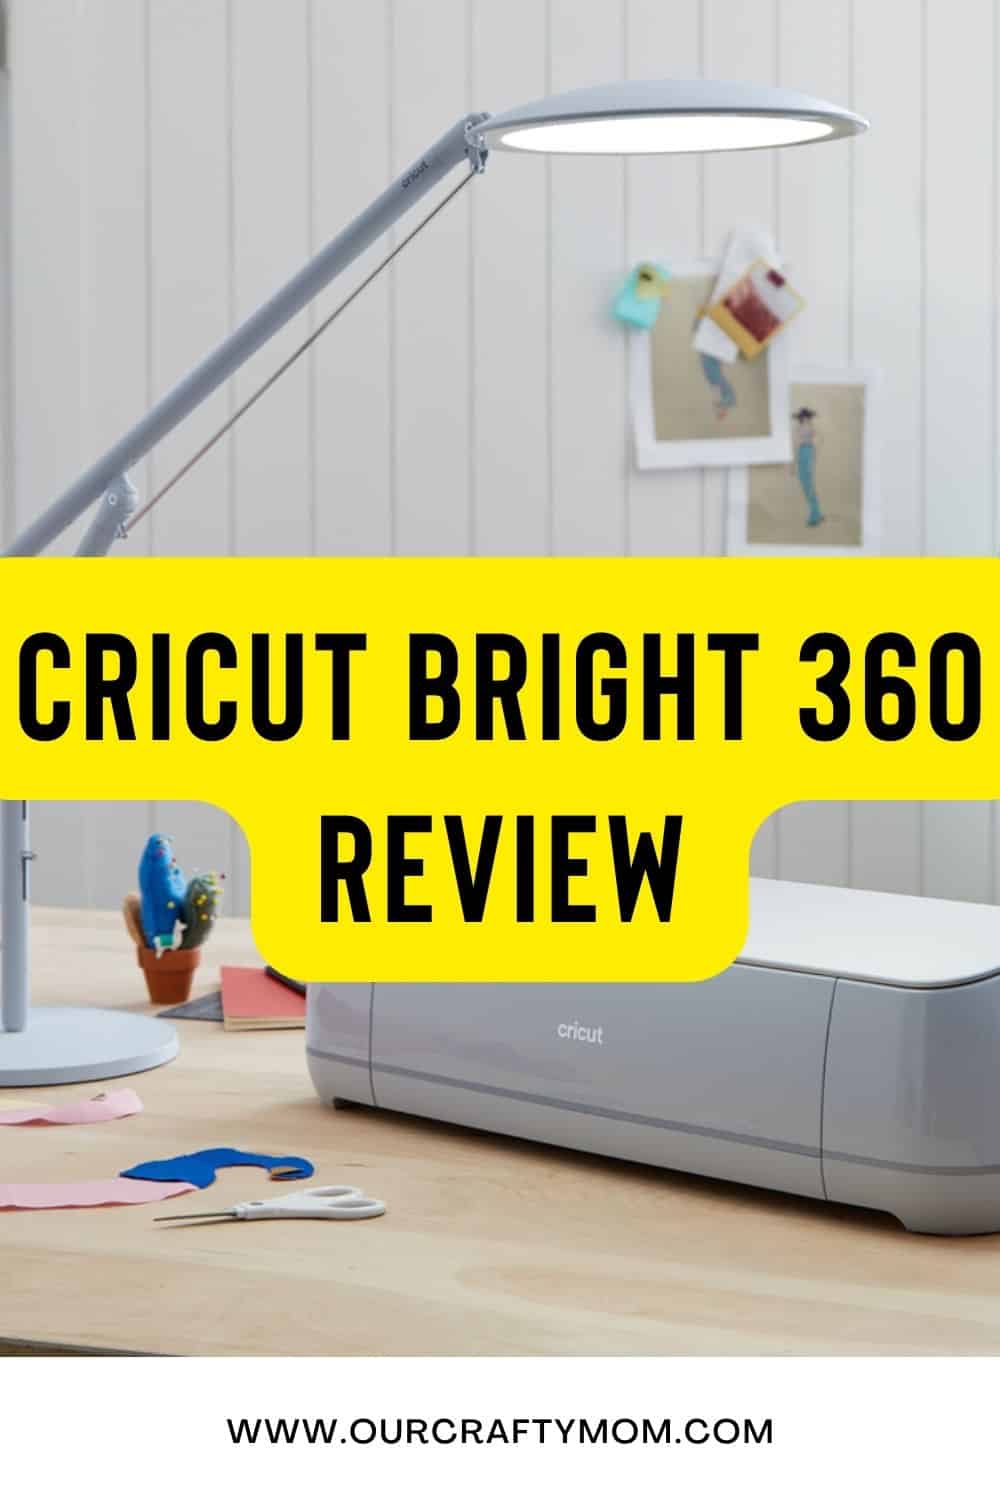 Watch BEFORE You Buy Cricut Bright 360 